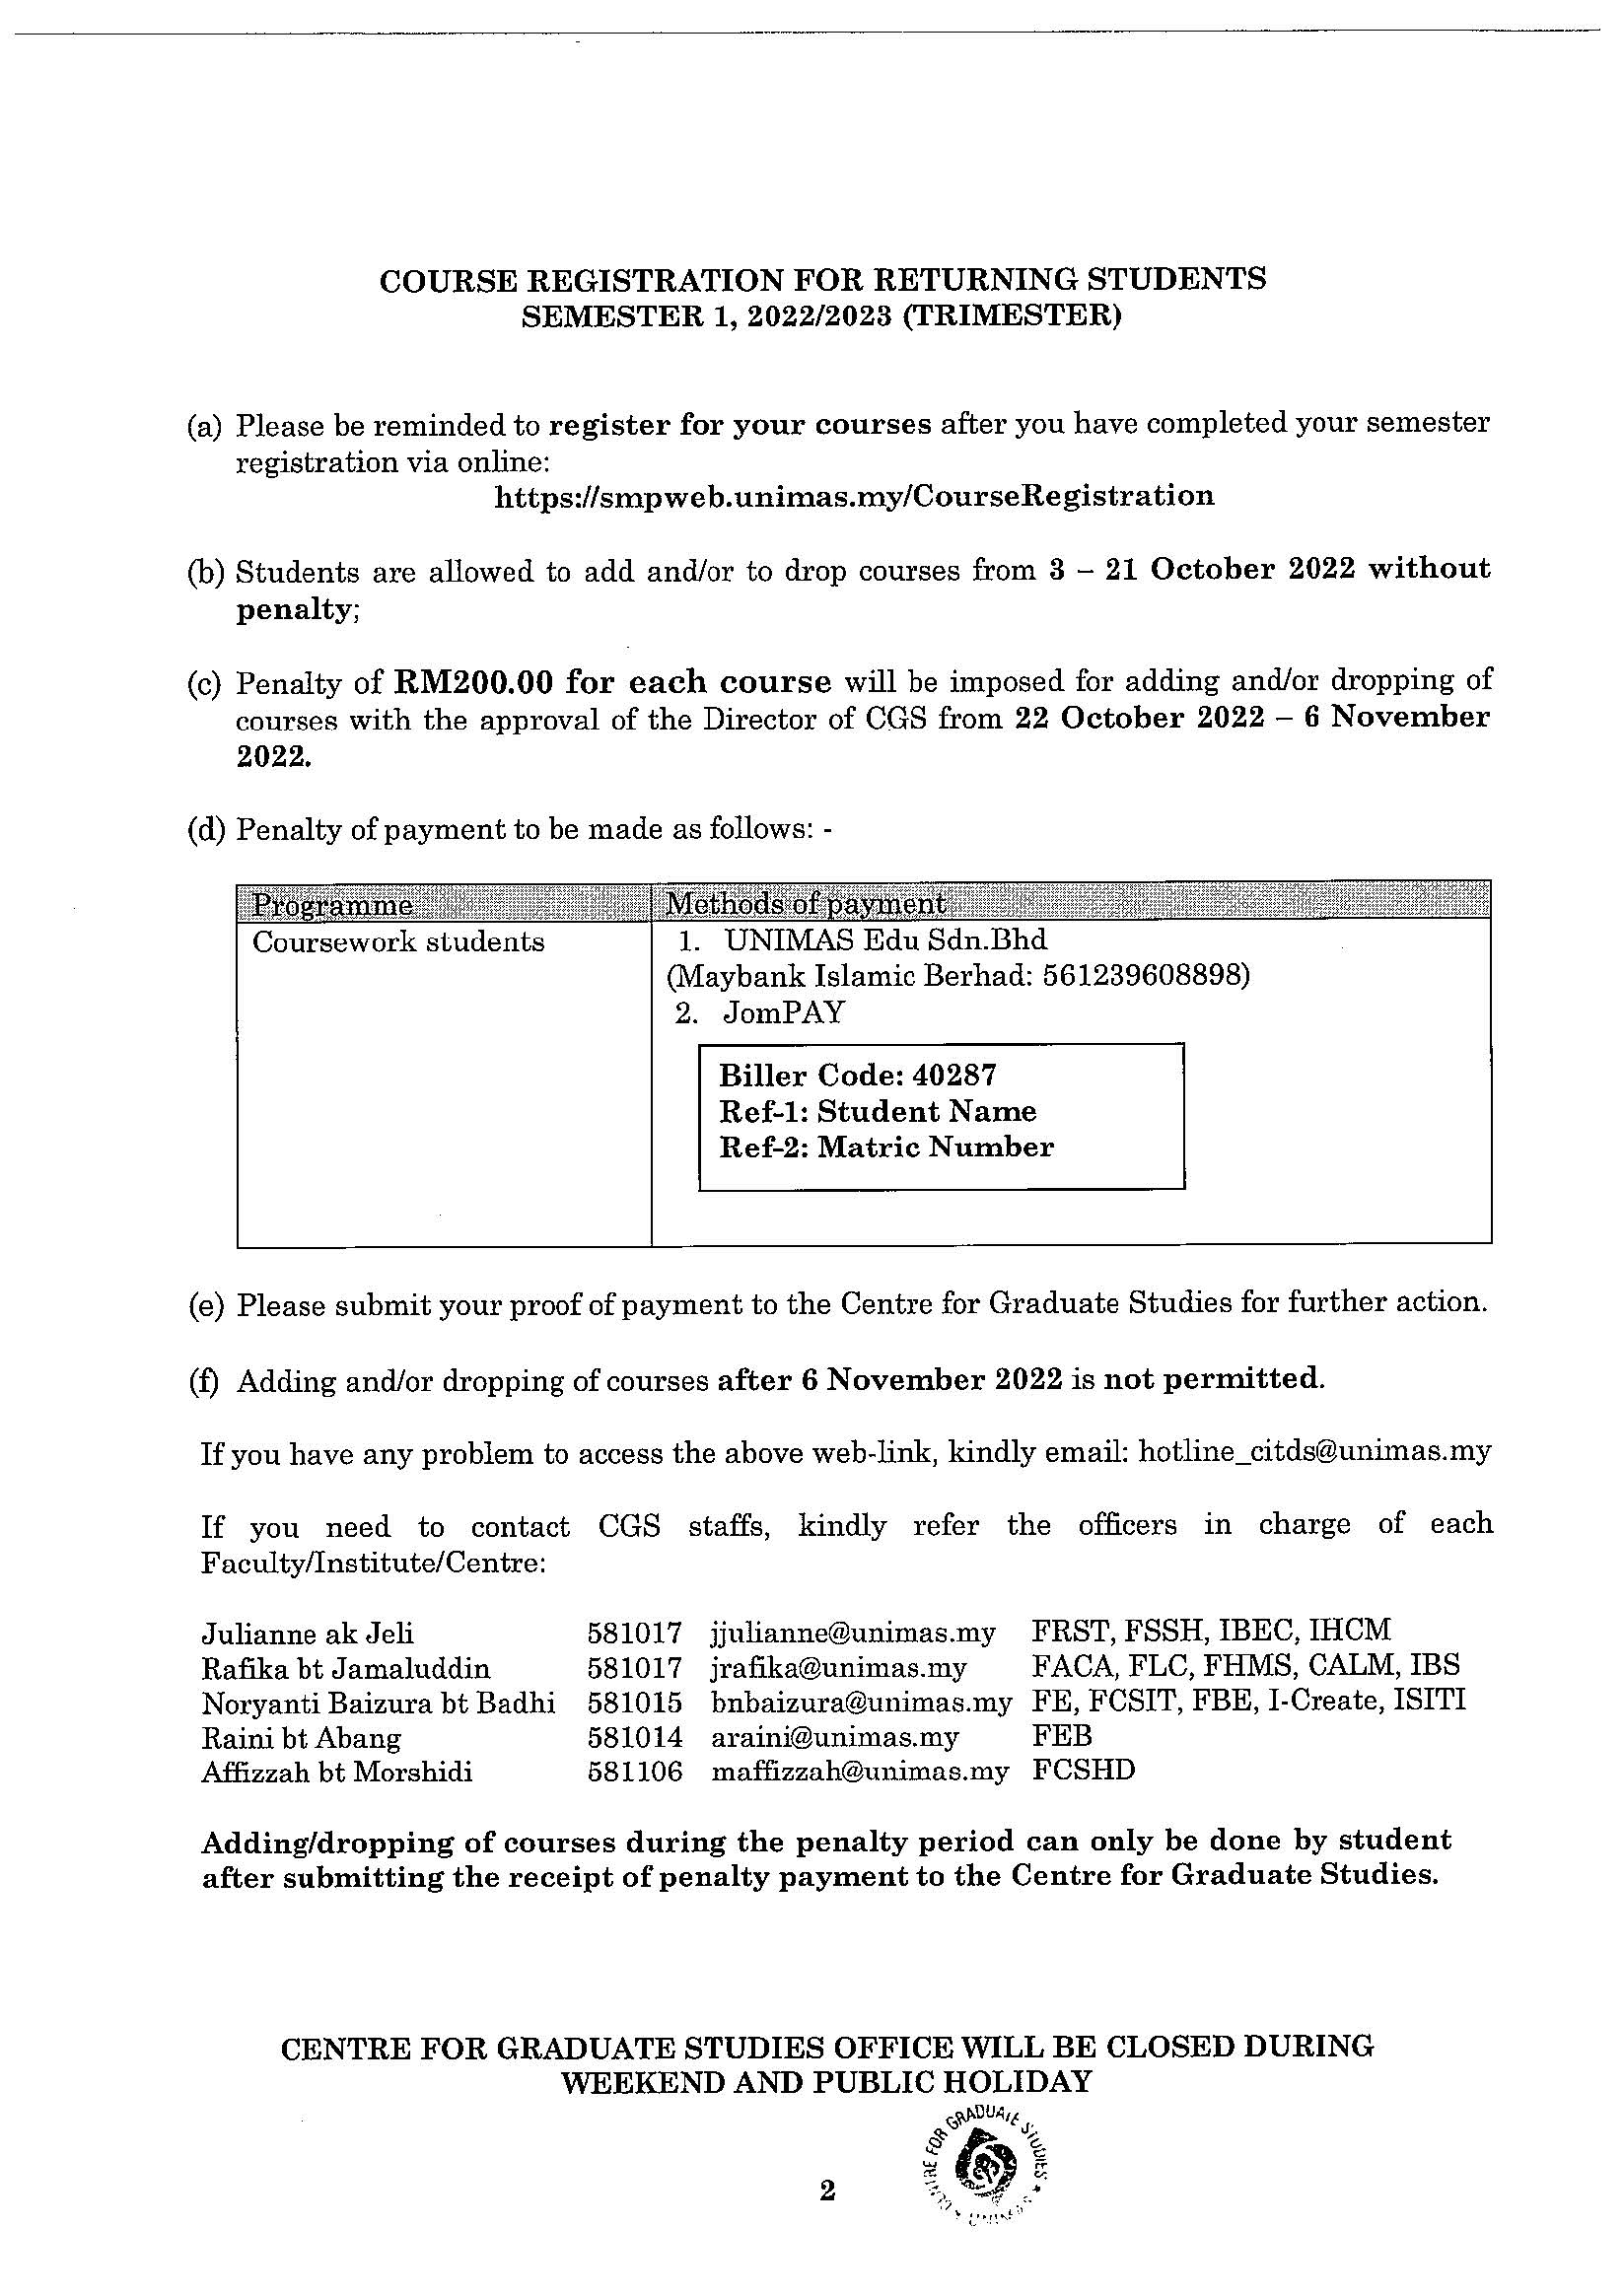 amendments notice of course registration for returning student Sem 1 2022 2023 (Trimester).jpg